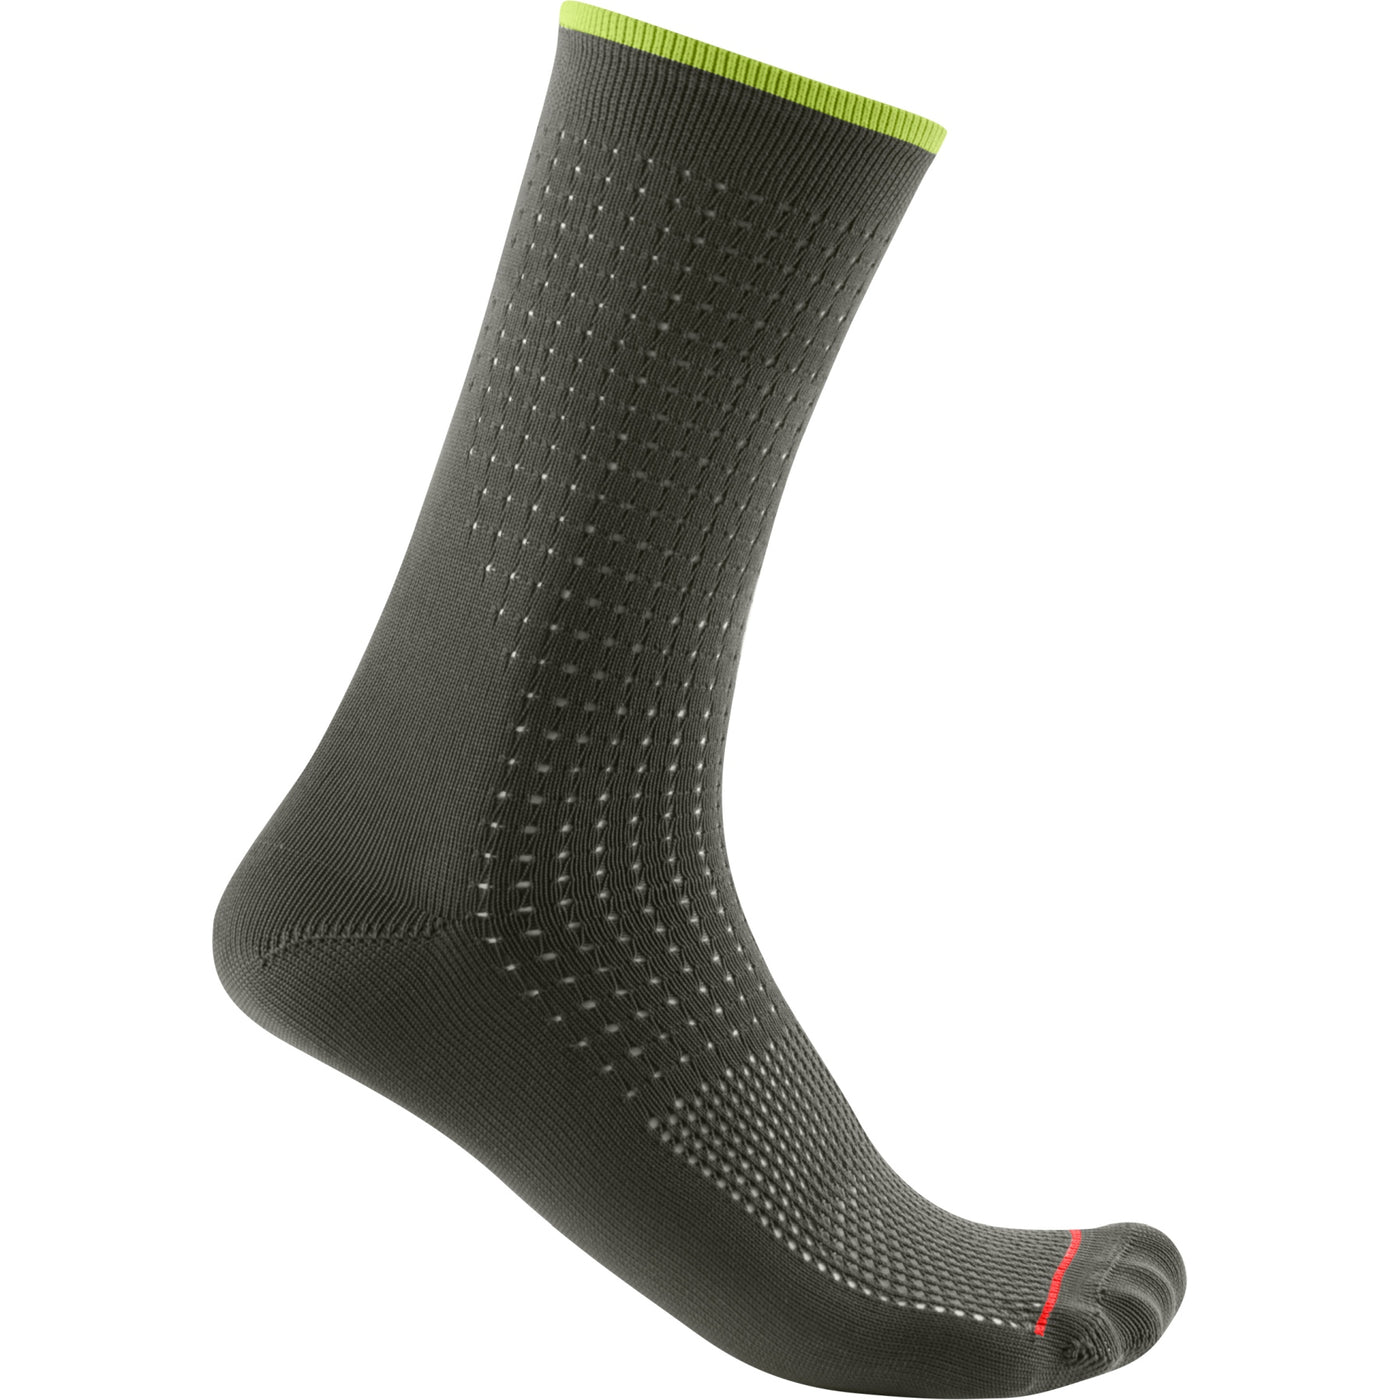 Castelli Premio 18 Men's Cycling Socks (Deep Green)